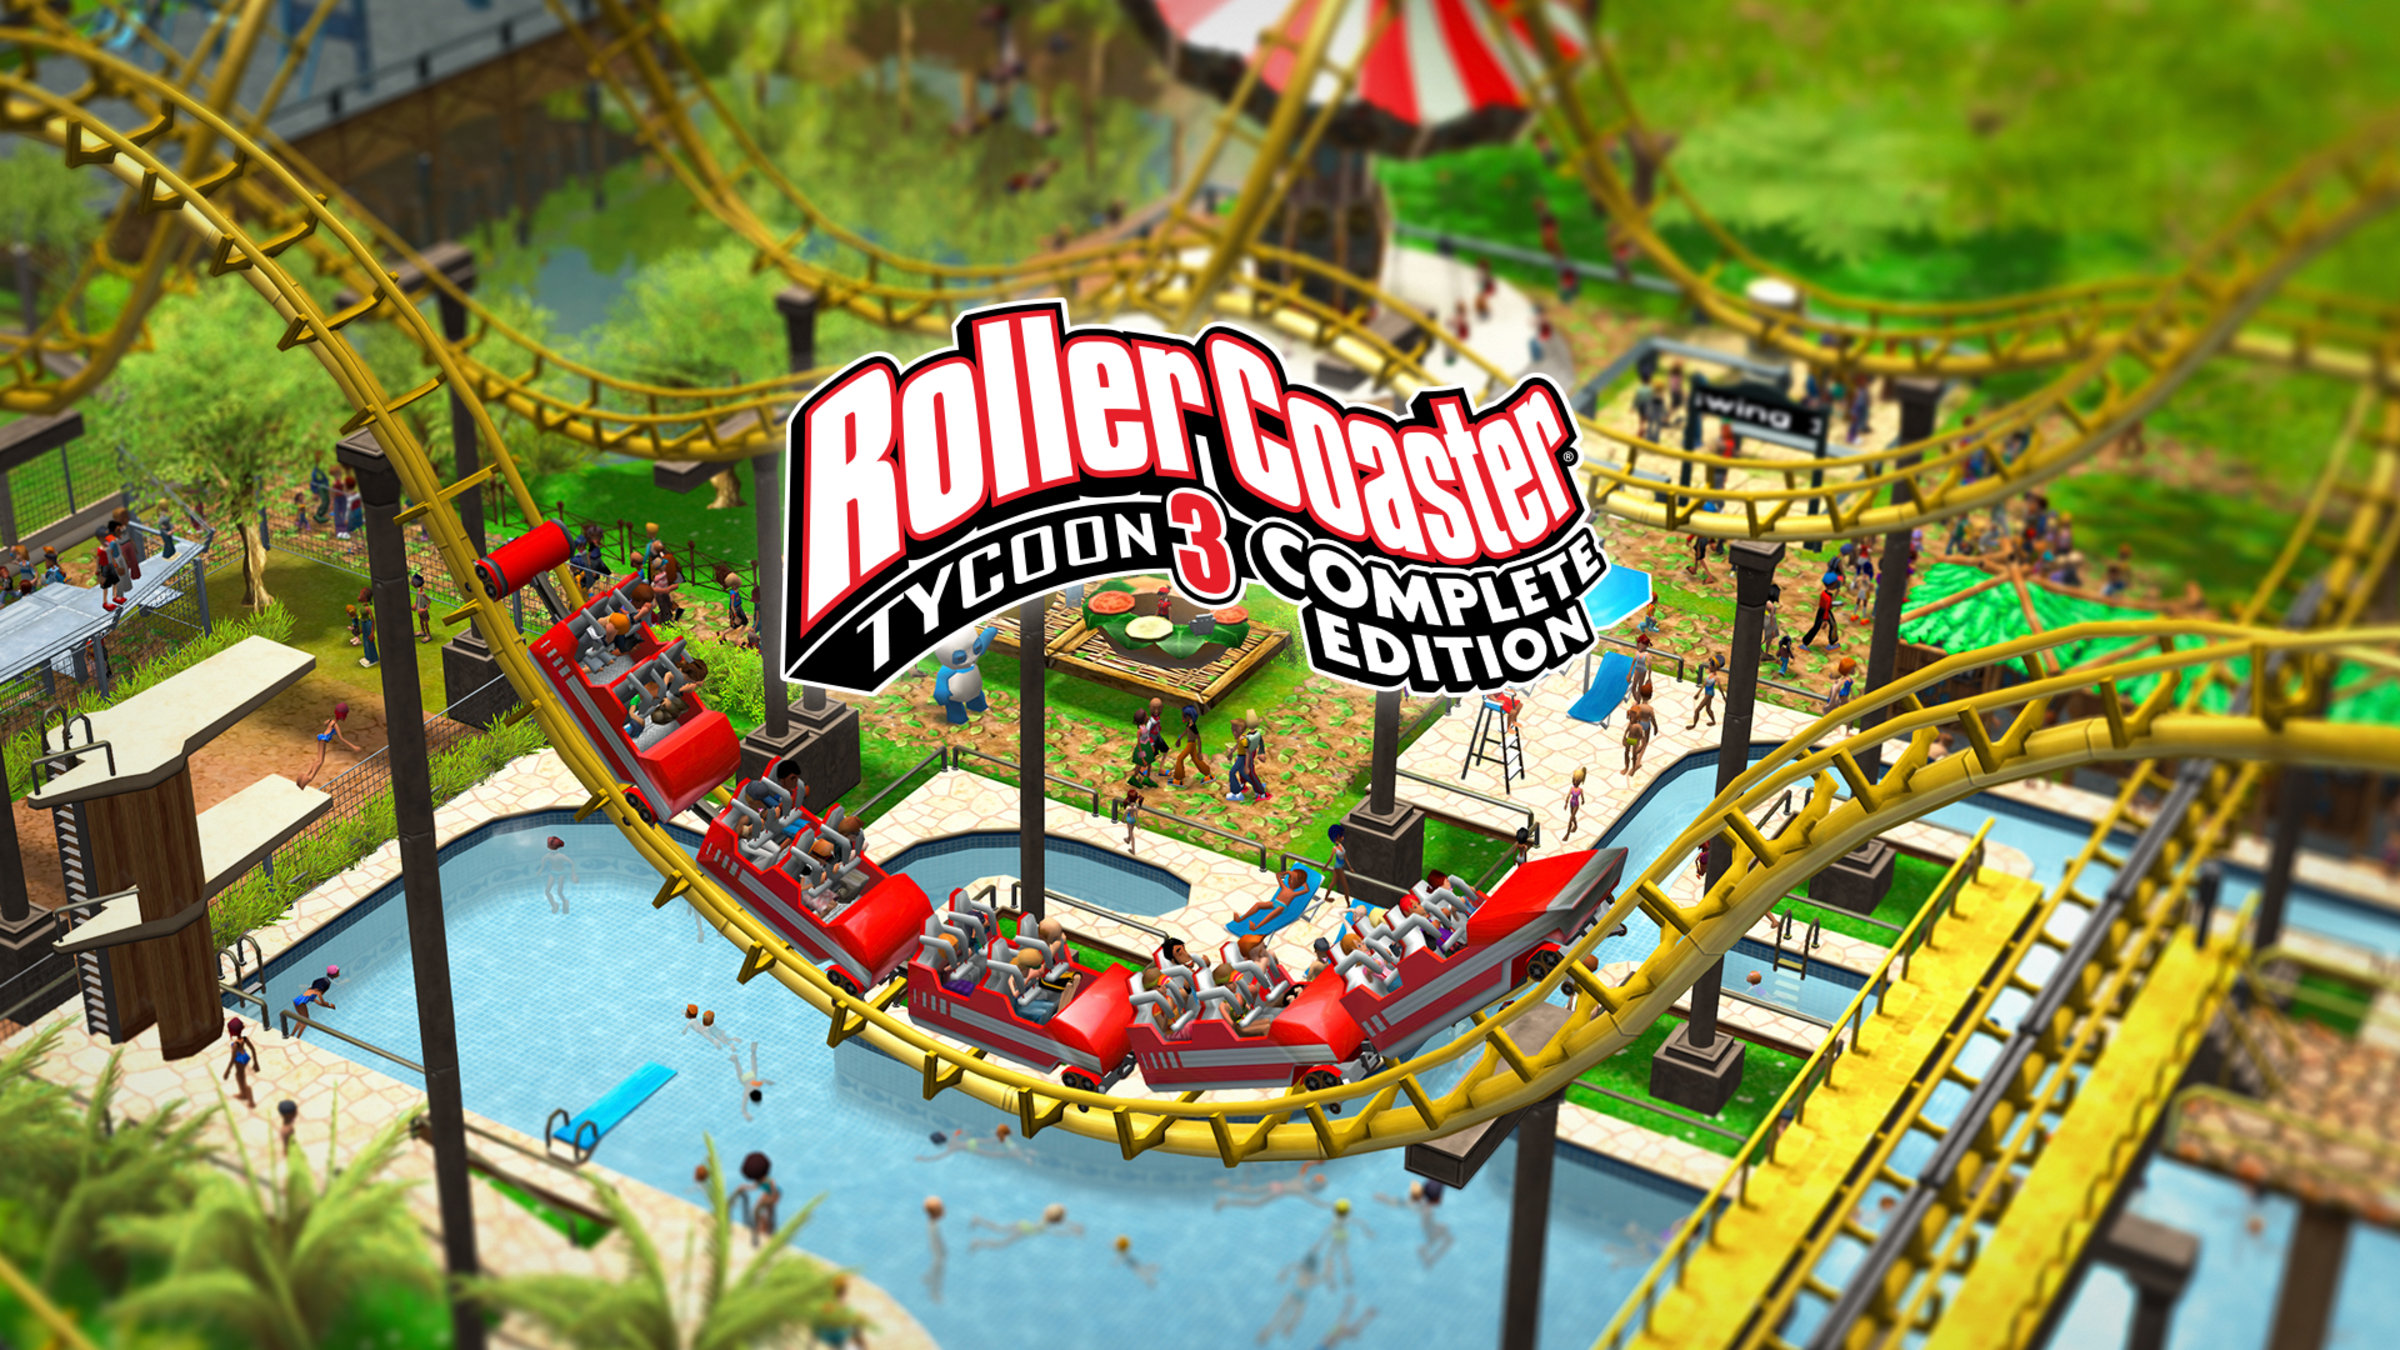 RollerCoaster Tycoon World™